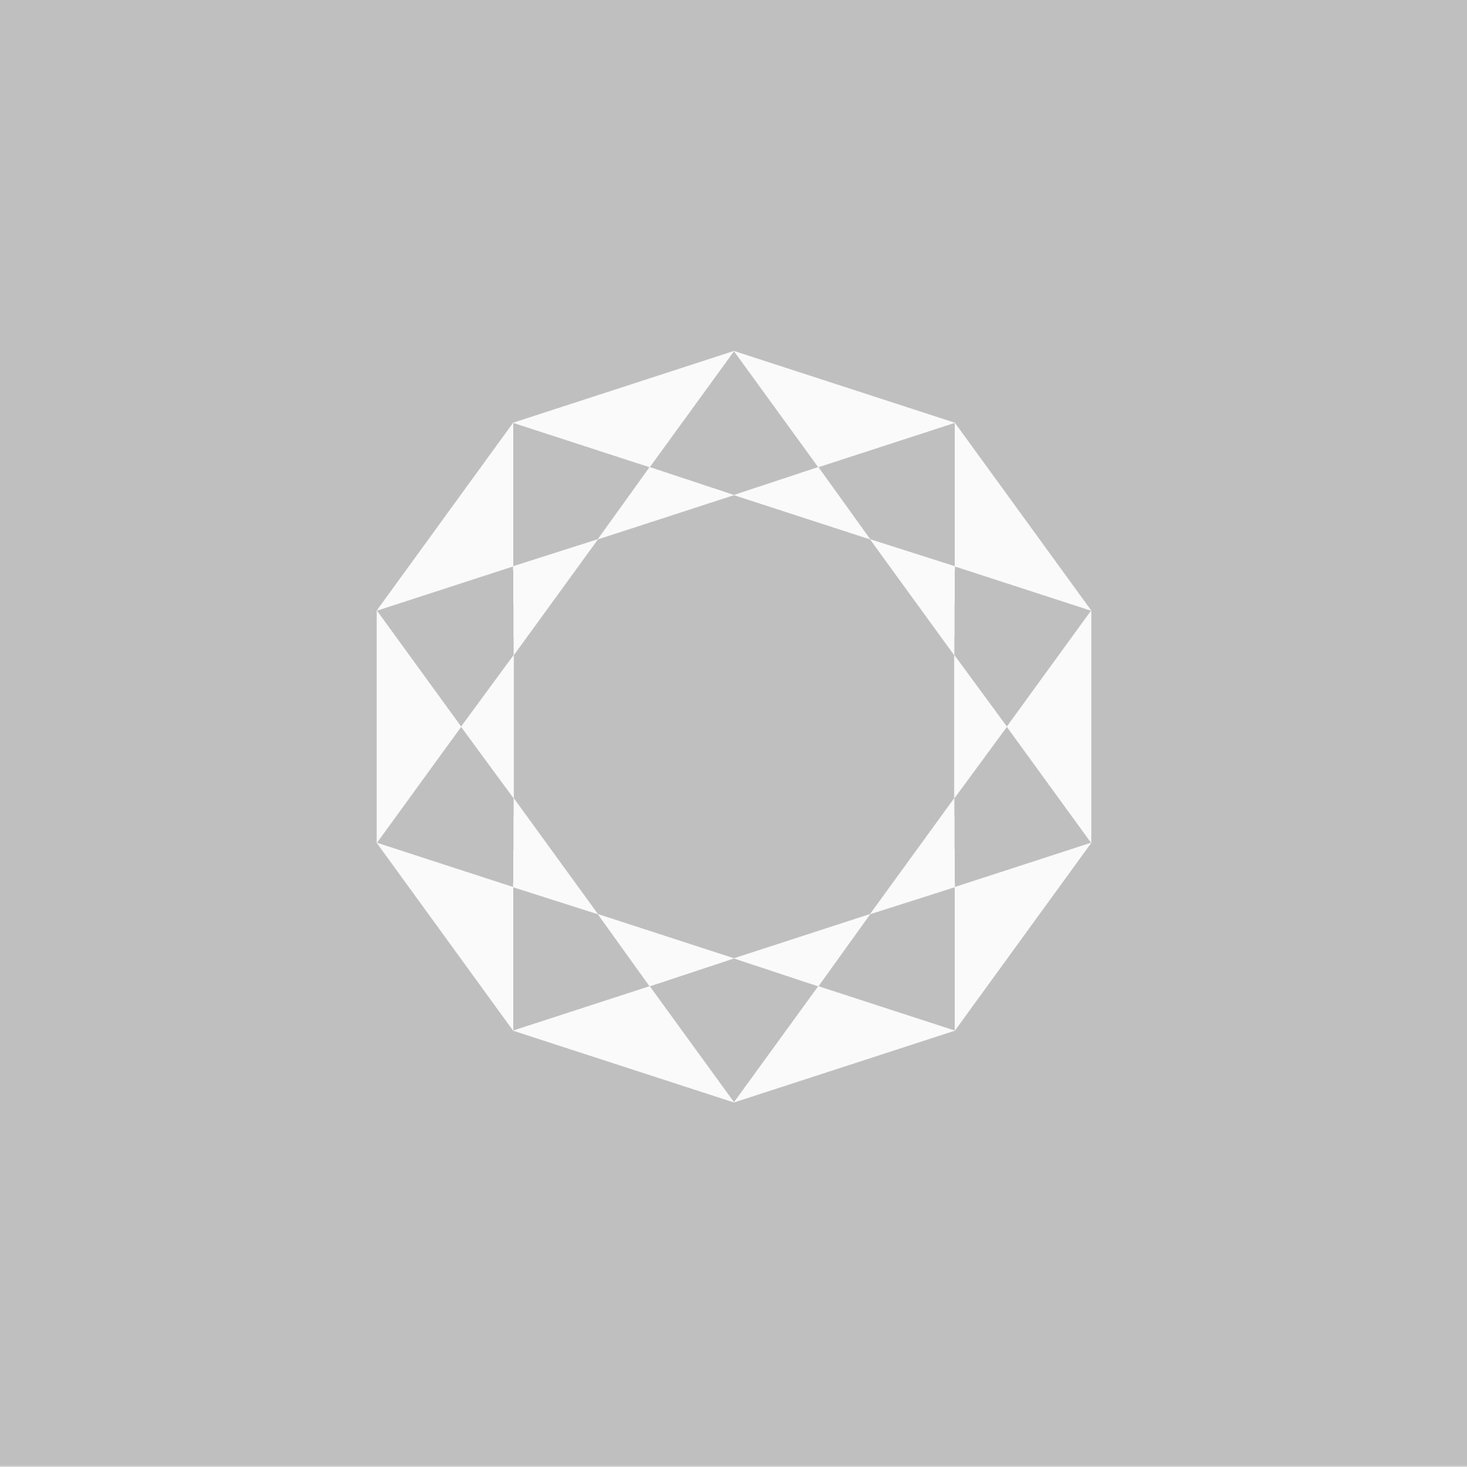 Logo designed by Paul Belford Ltd. for lab diamond business Osofor